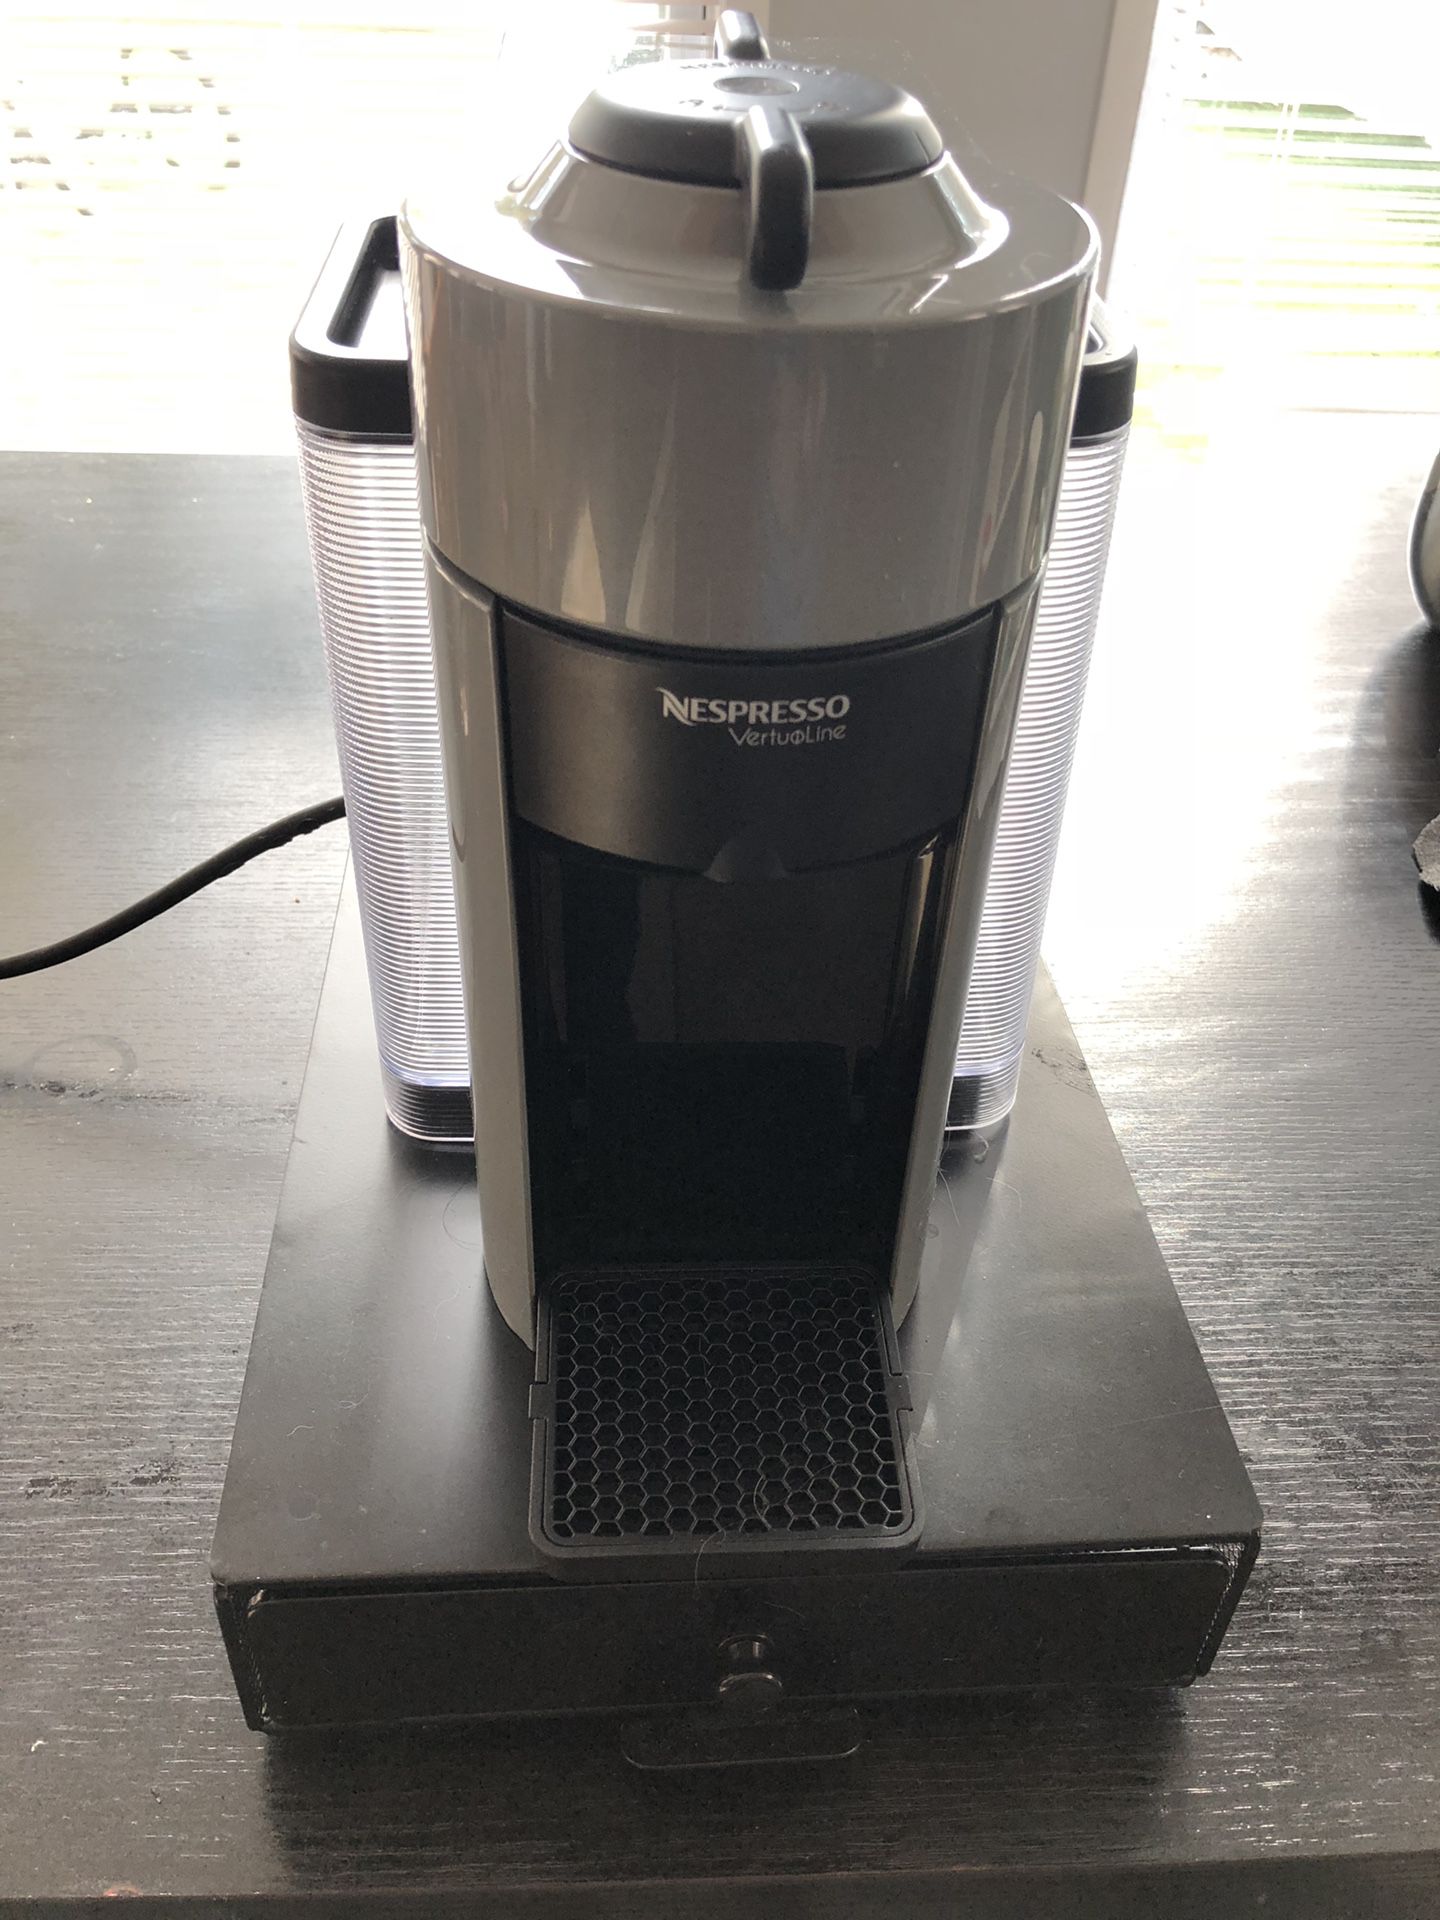 Nespresso Vertuoline coffee maker with organizer tray